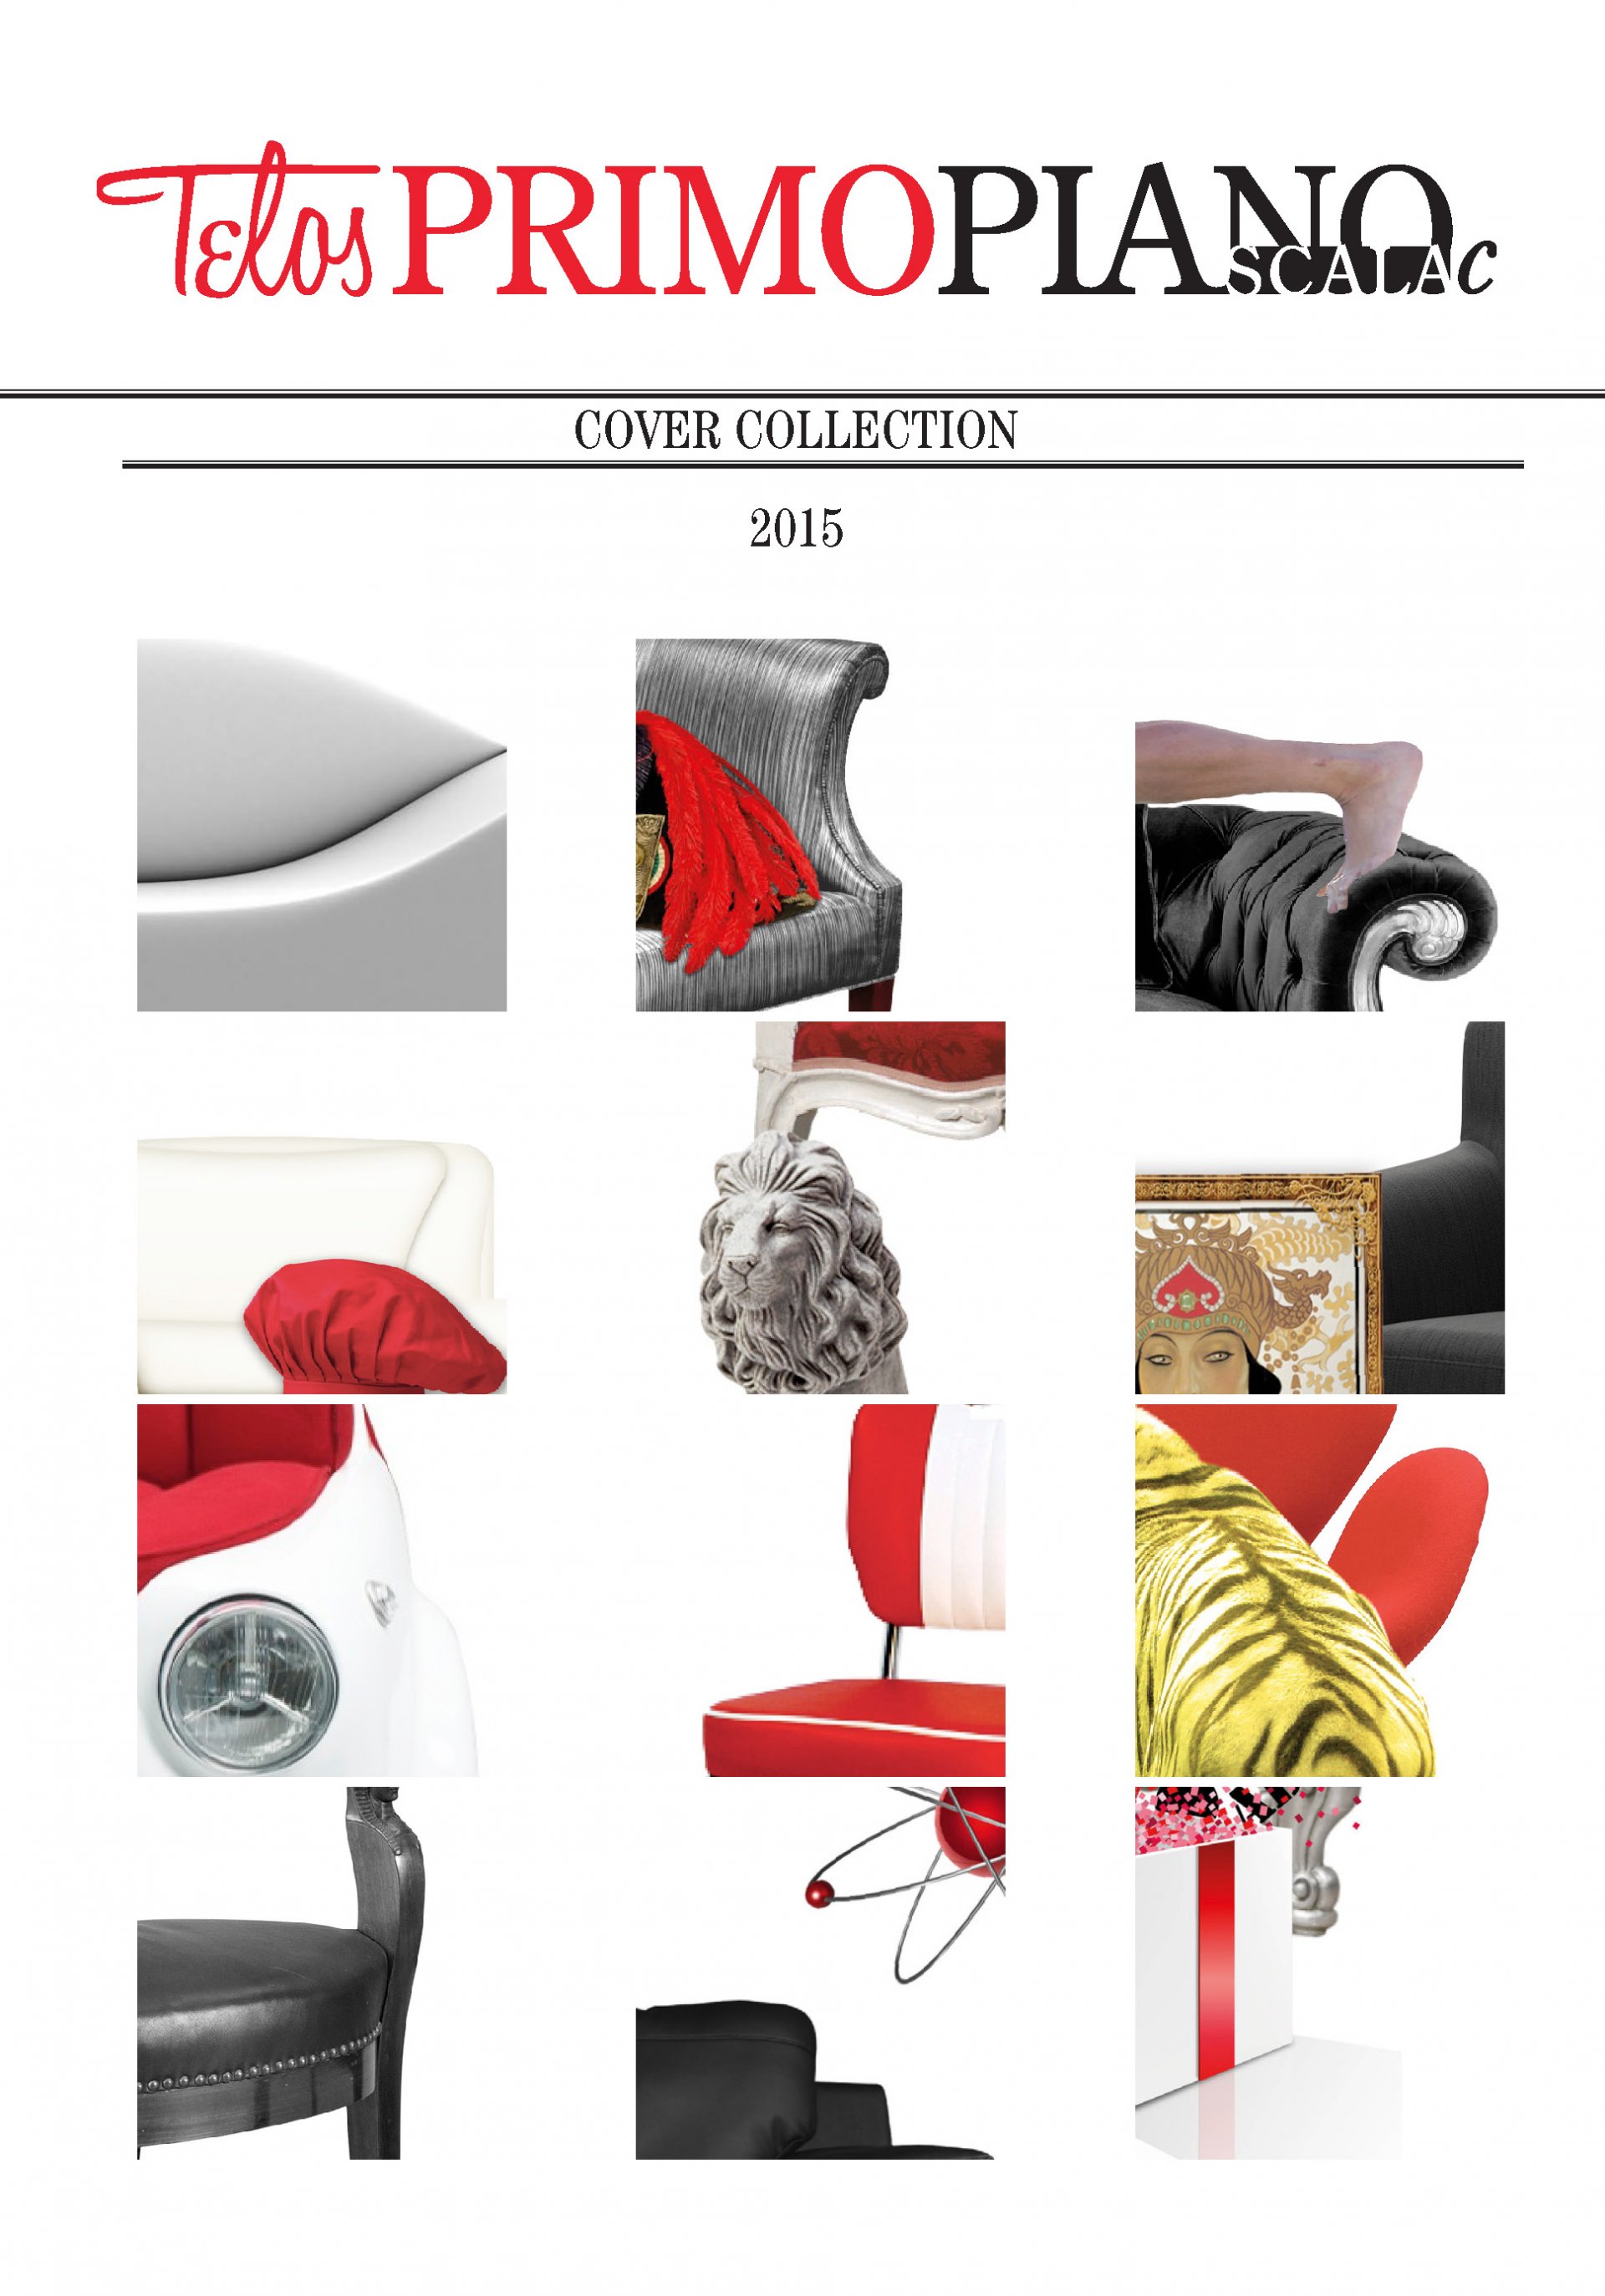 PRIMO PIANO SCALA c - the Cover Collection 2015